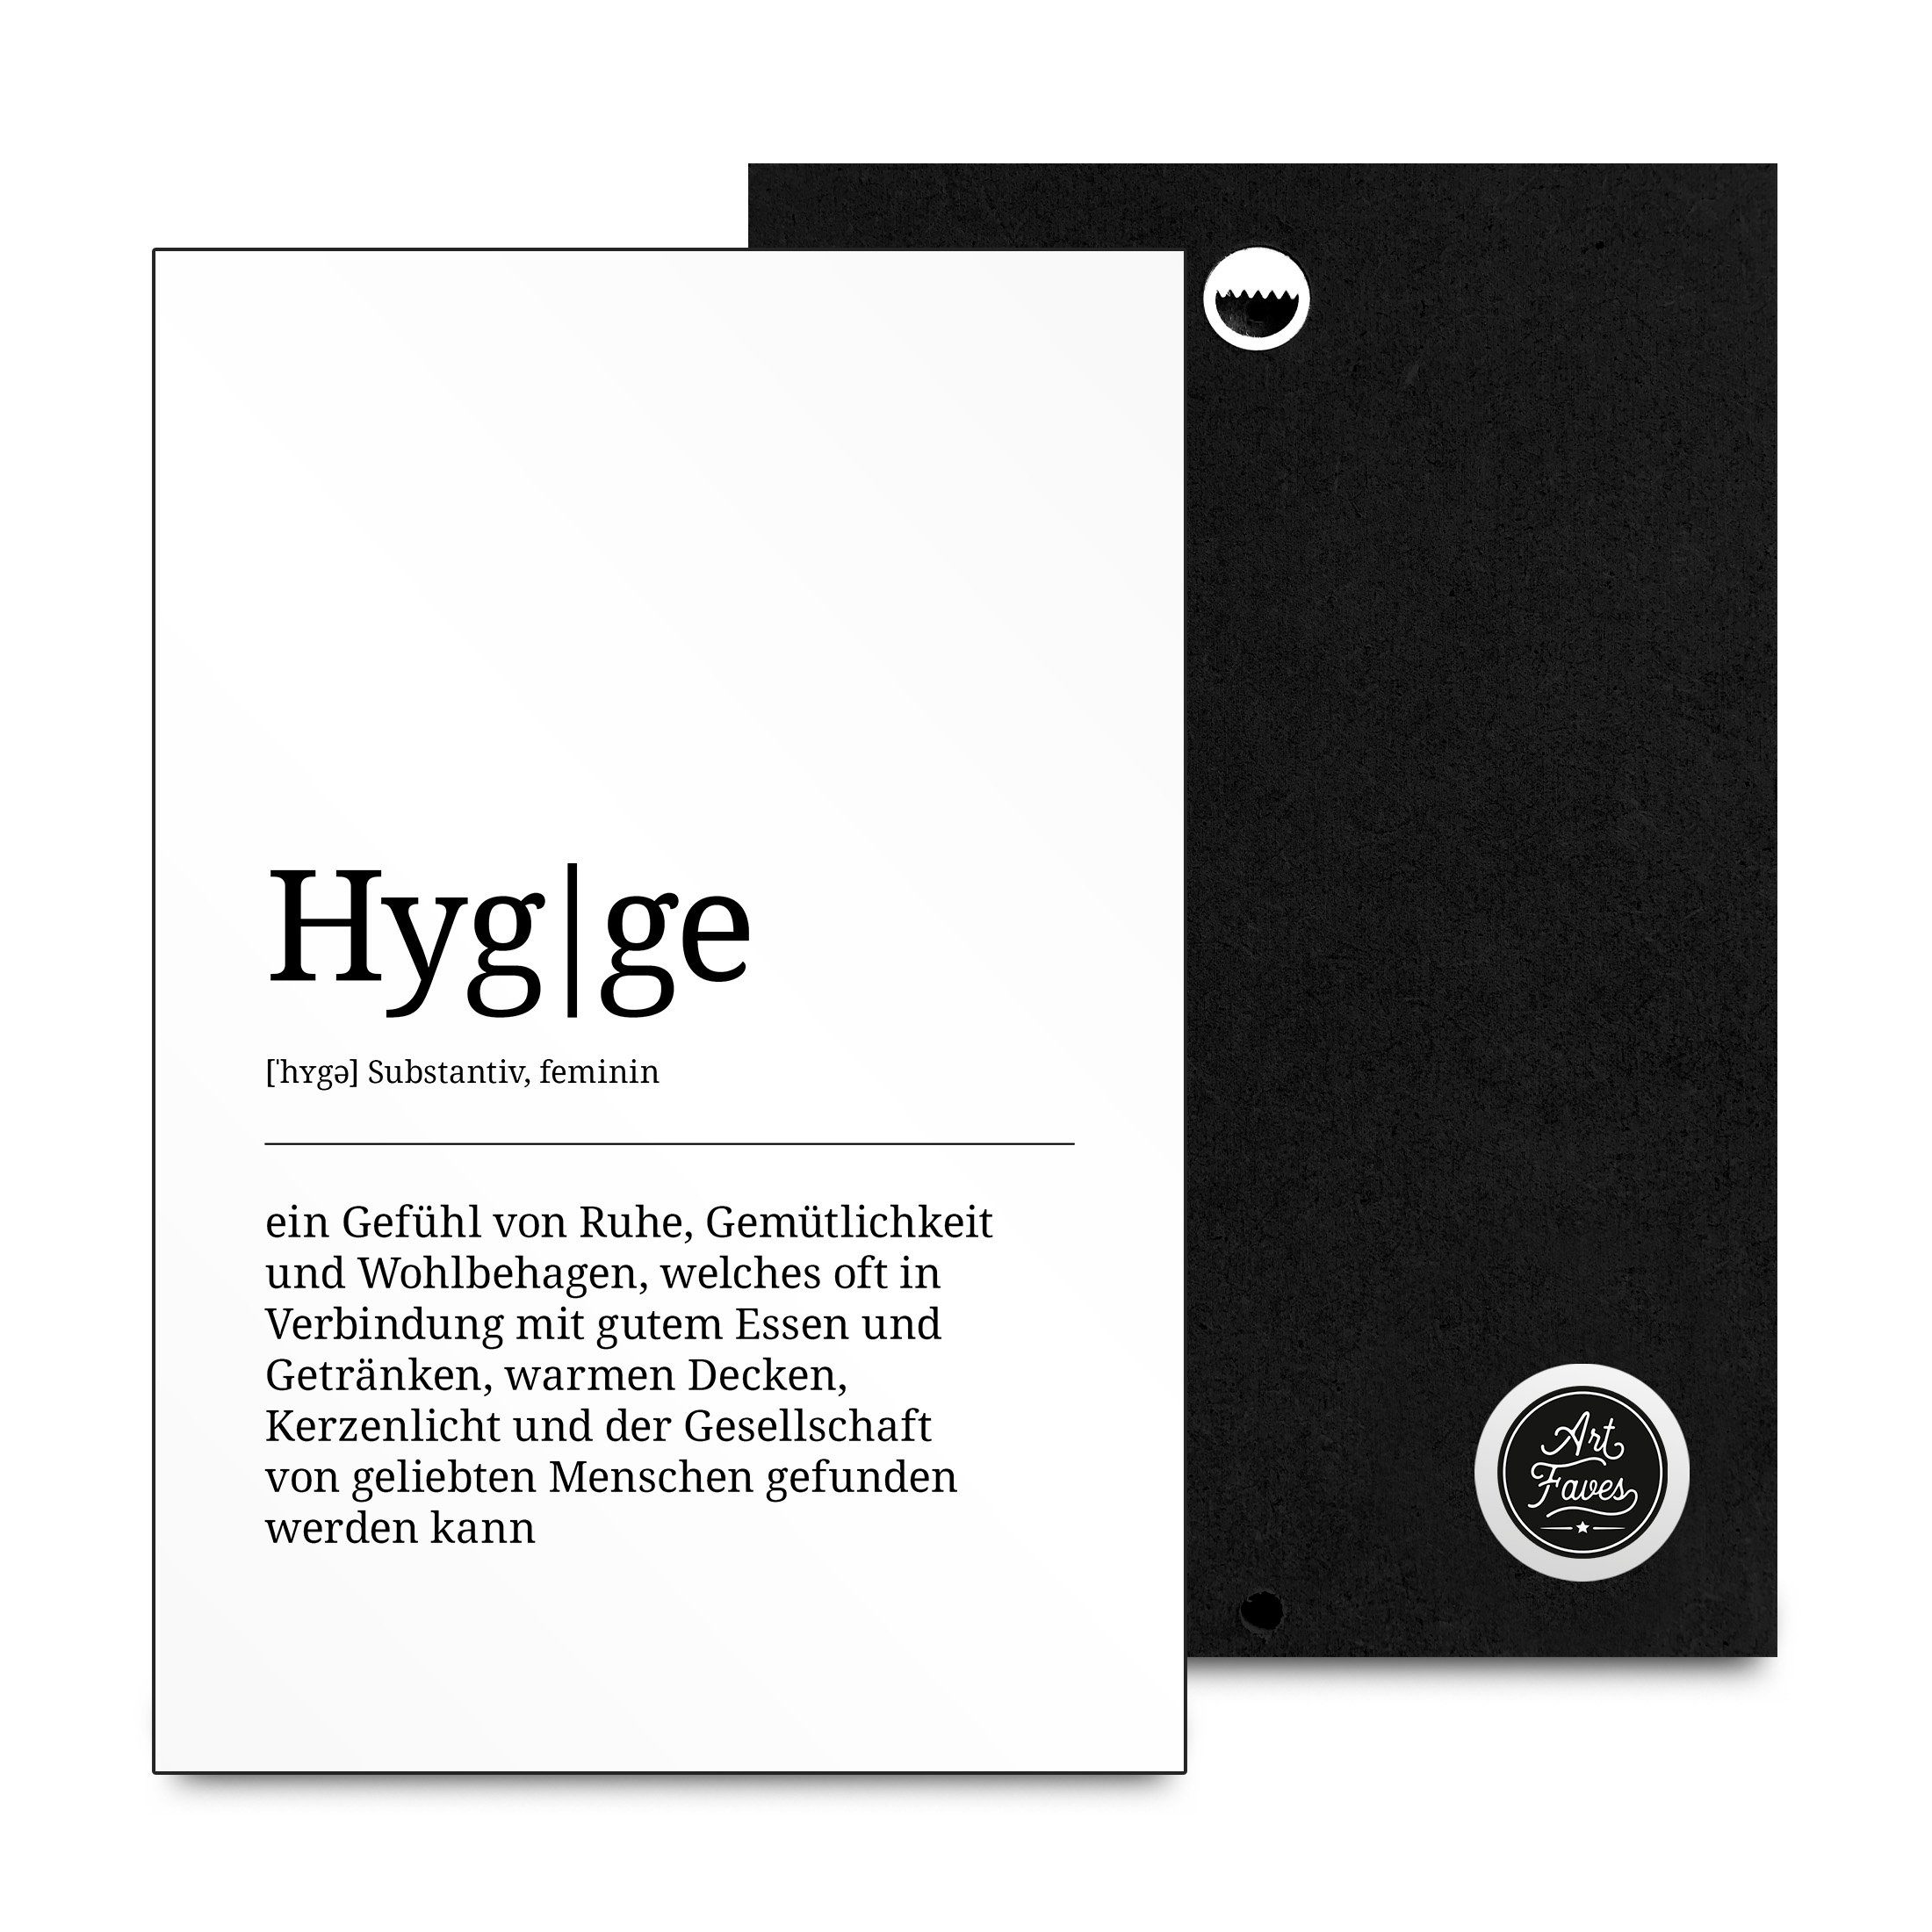 ARTFAVES Holzbild Hygge, Geschenk zum Tehma Zuhause / Skandinavisch